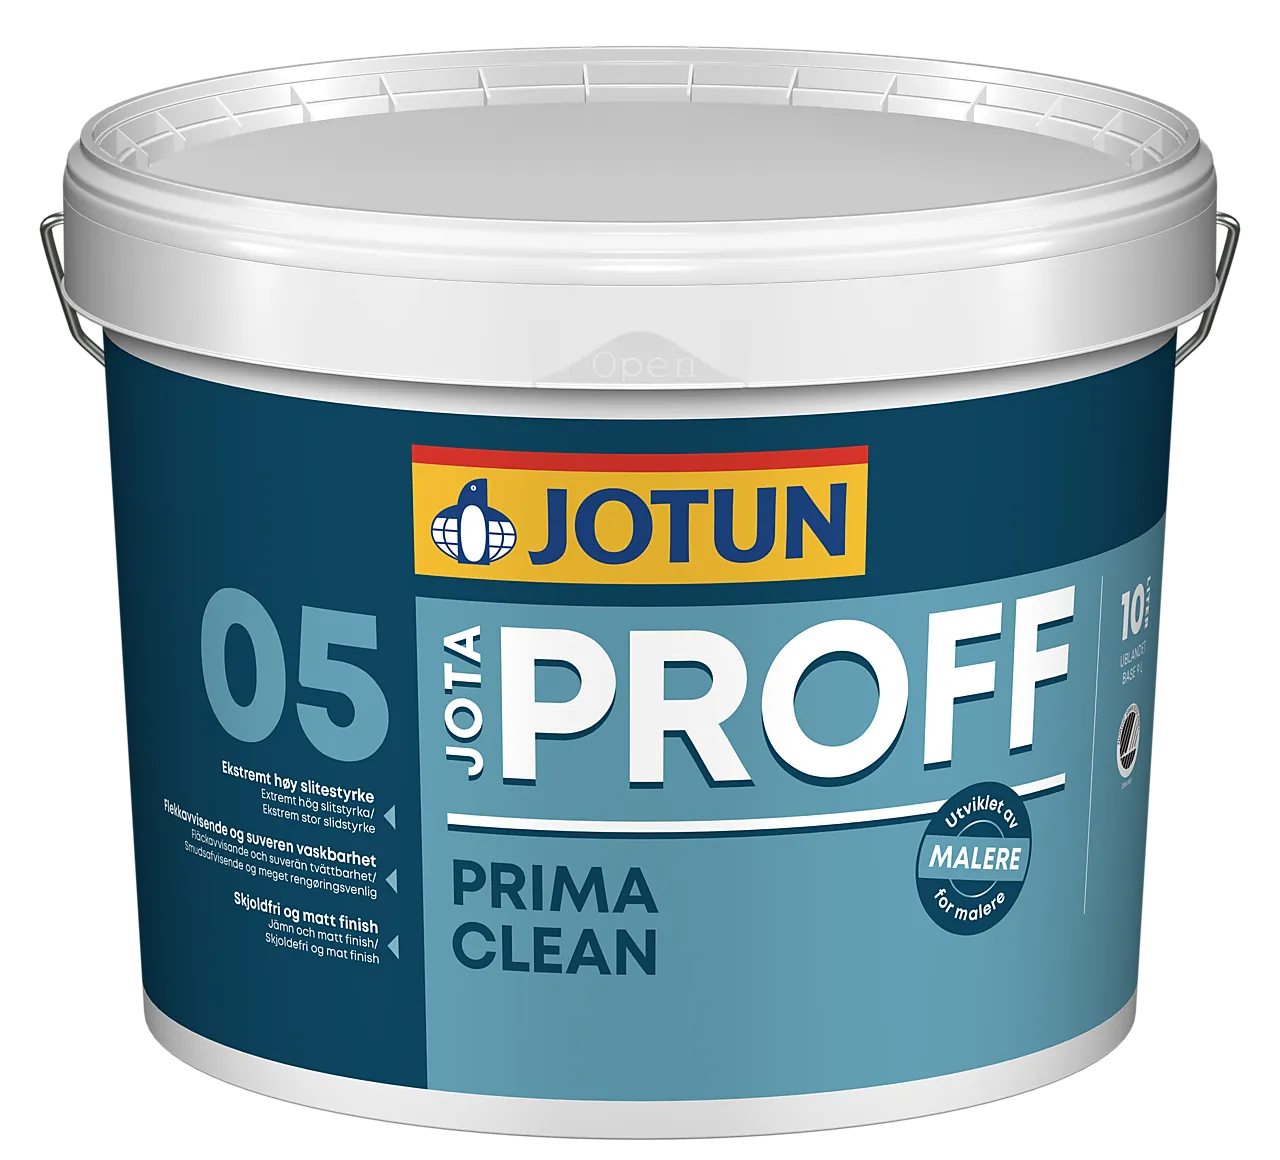 Jotun Prima Clean 05 a-base 9 liter